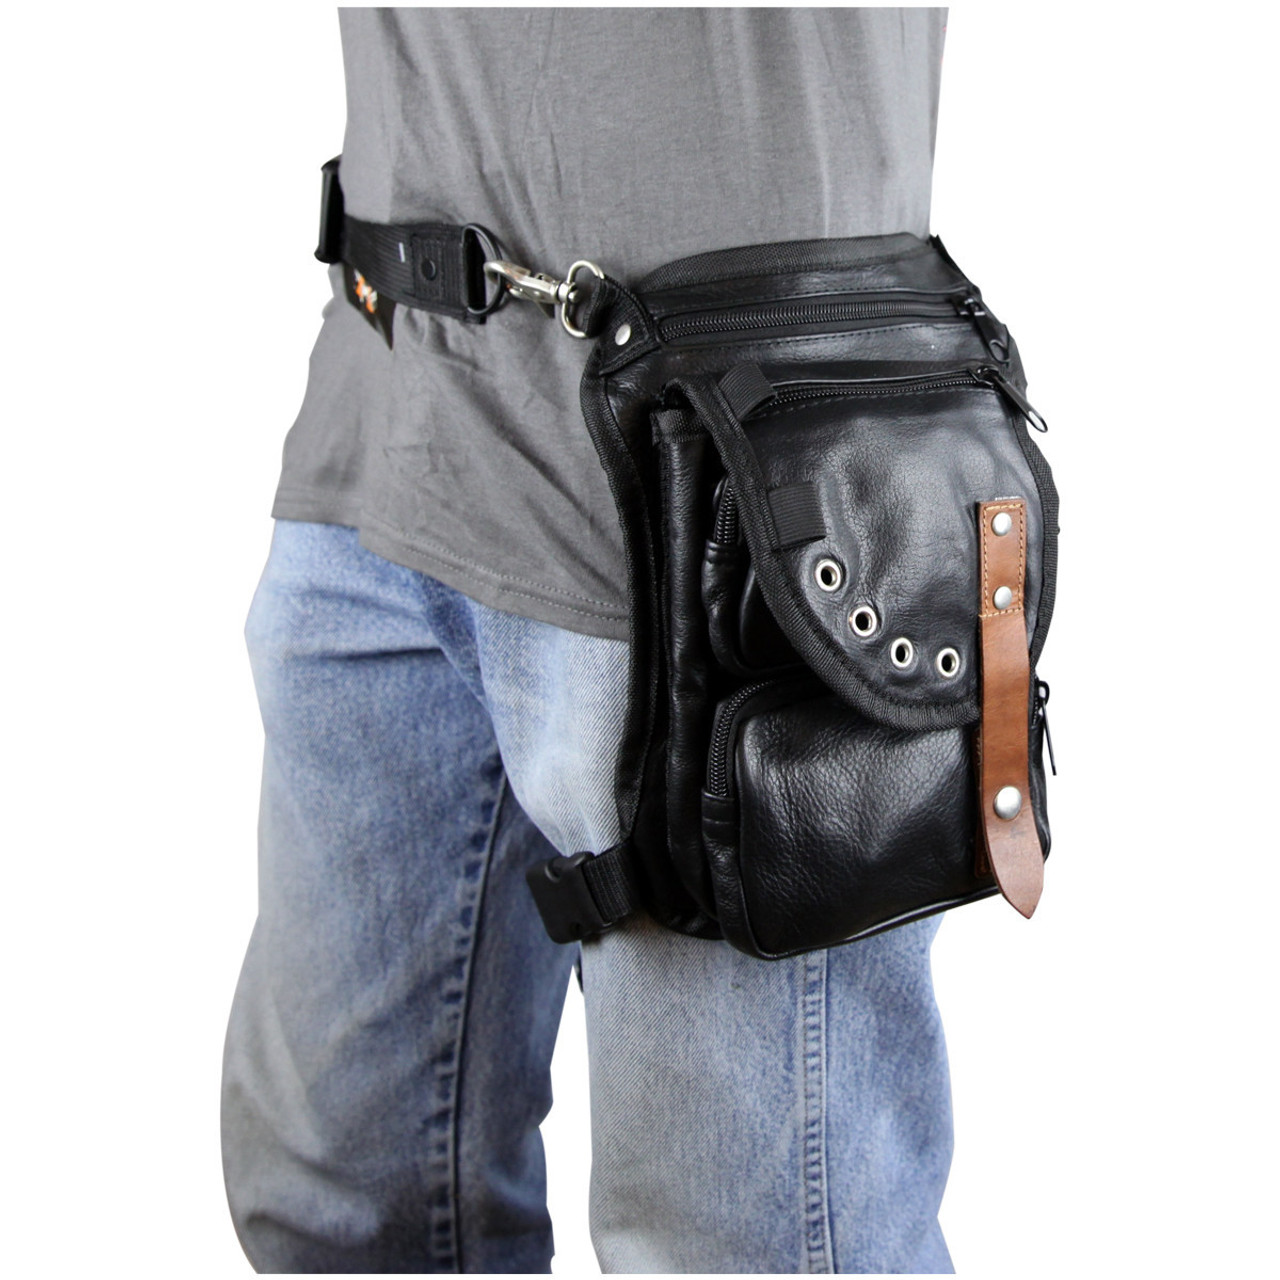 Leather Thigh Bag Hip Bag Leather Covered Leg Bag Thigh 